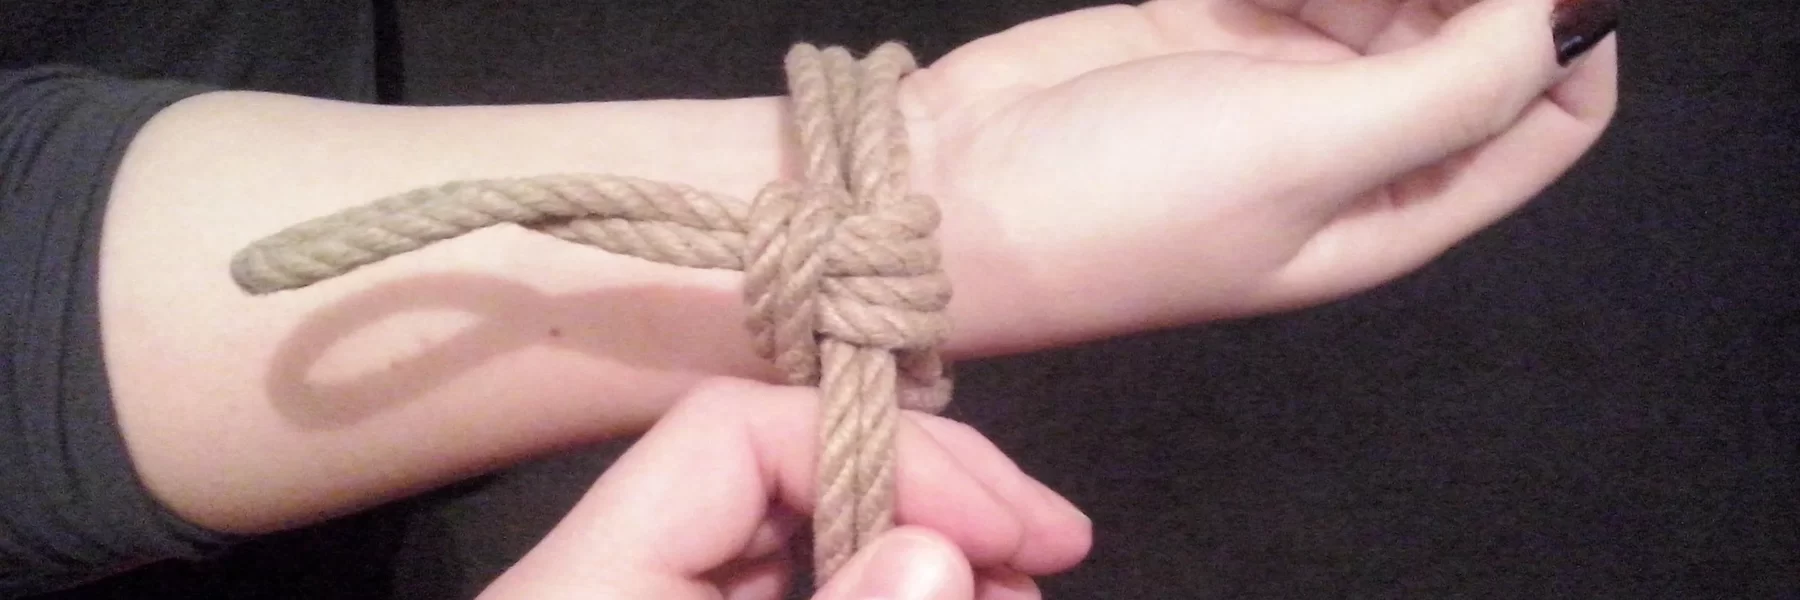 Shibari - A Rope Tutorial on Creating Beautiful and Functional Bondage